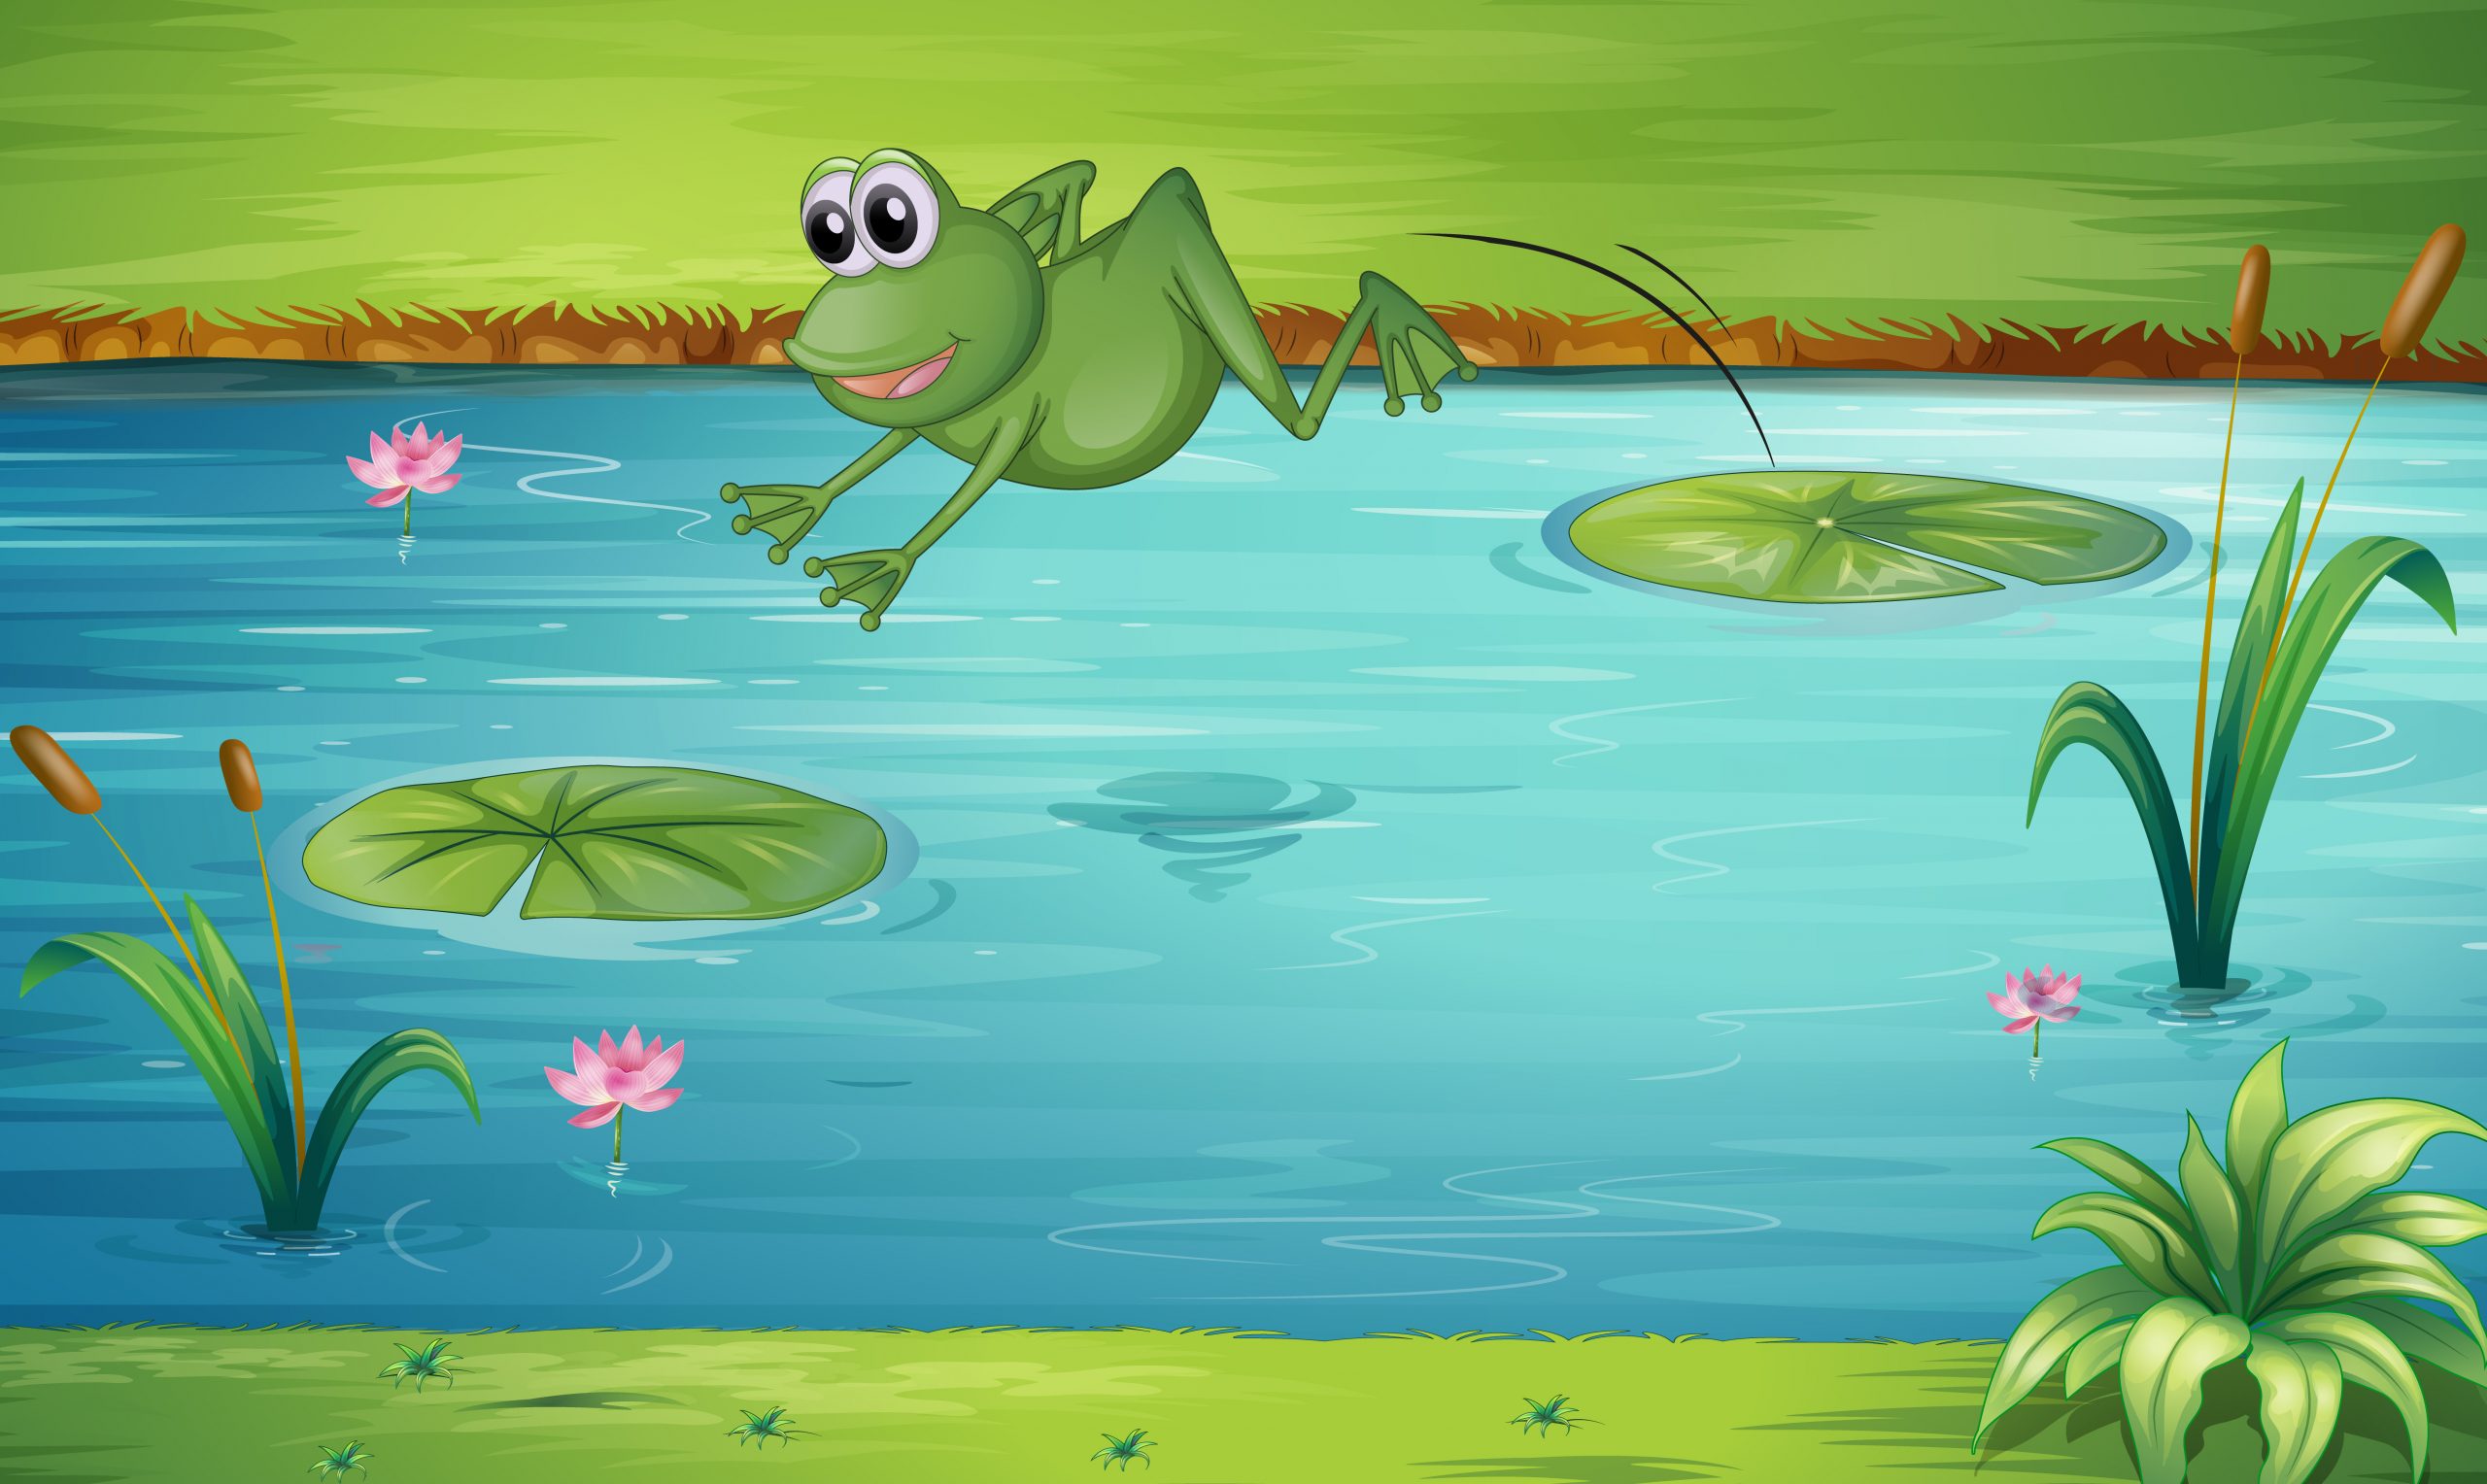 https://depositphotos.com/18832775/stock-illustration-a-frog-jumping.html